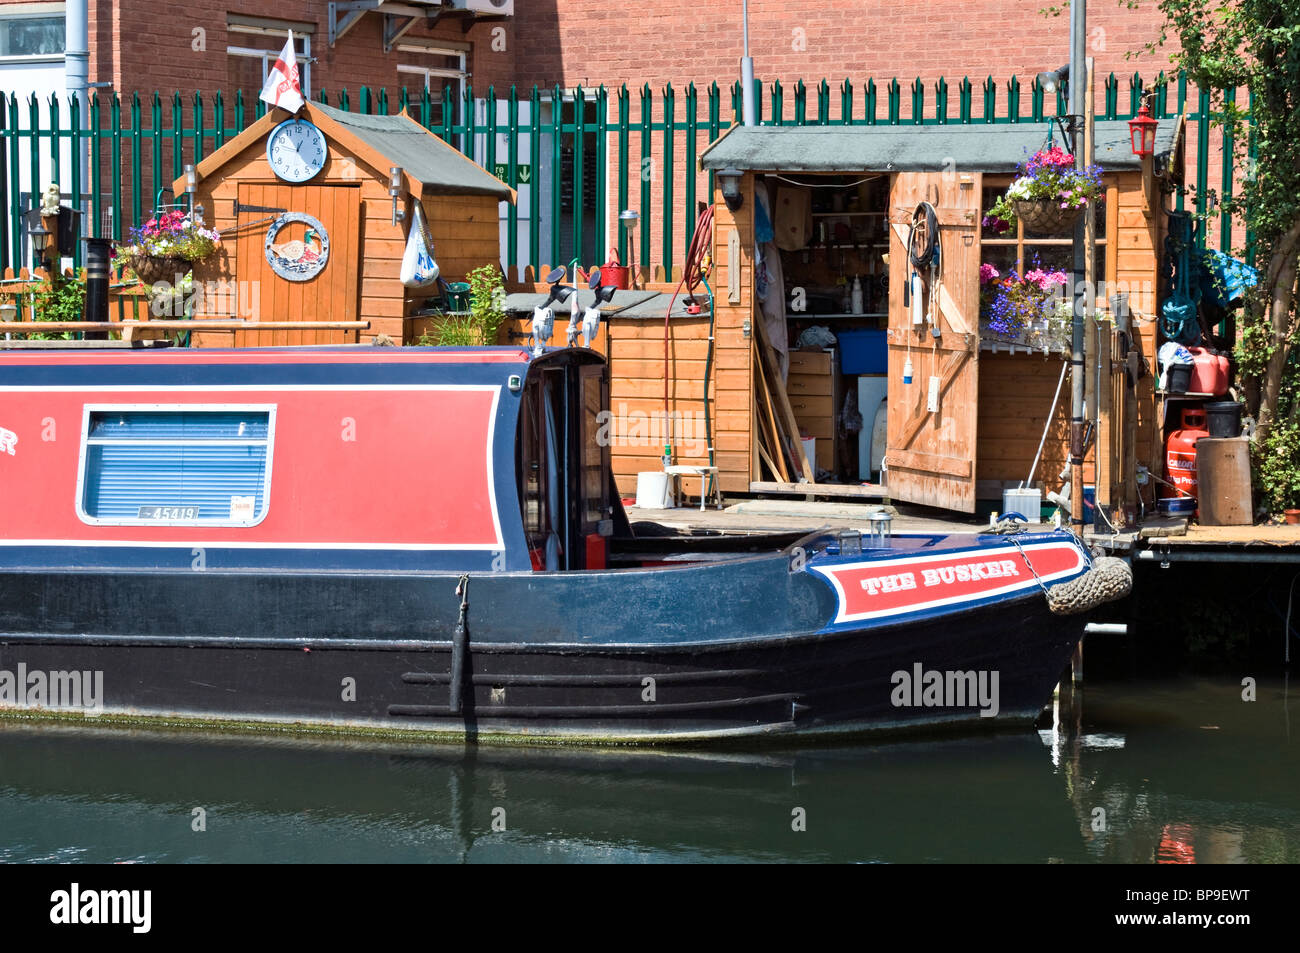 Longboat vertäut am Fluss Lee Navigation Kanal, Hertfordshire, Vereinigtes Königreich Stockfoto